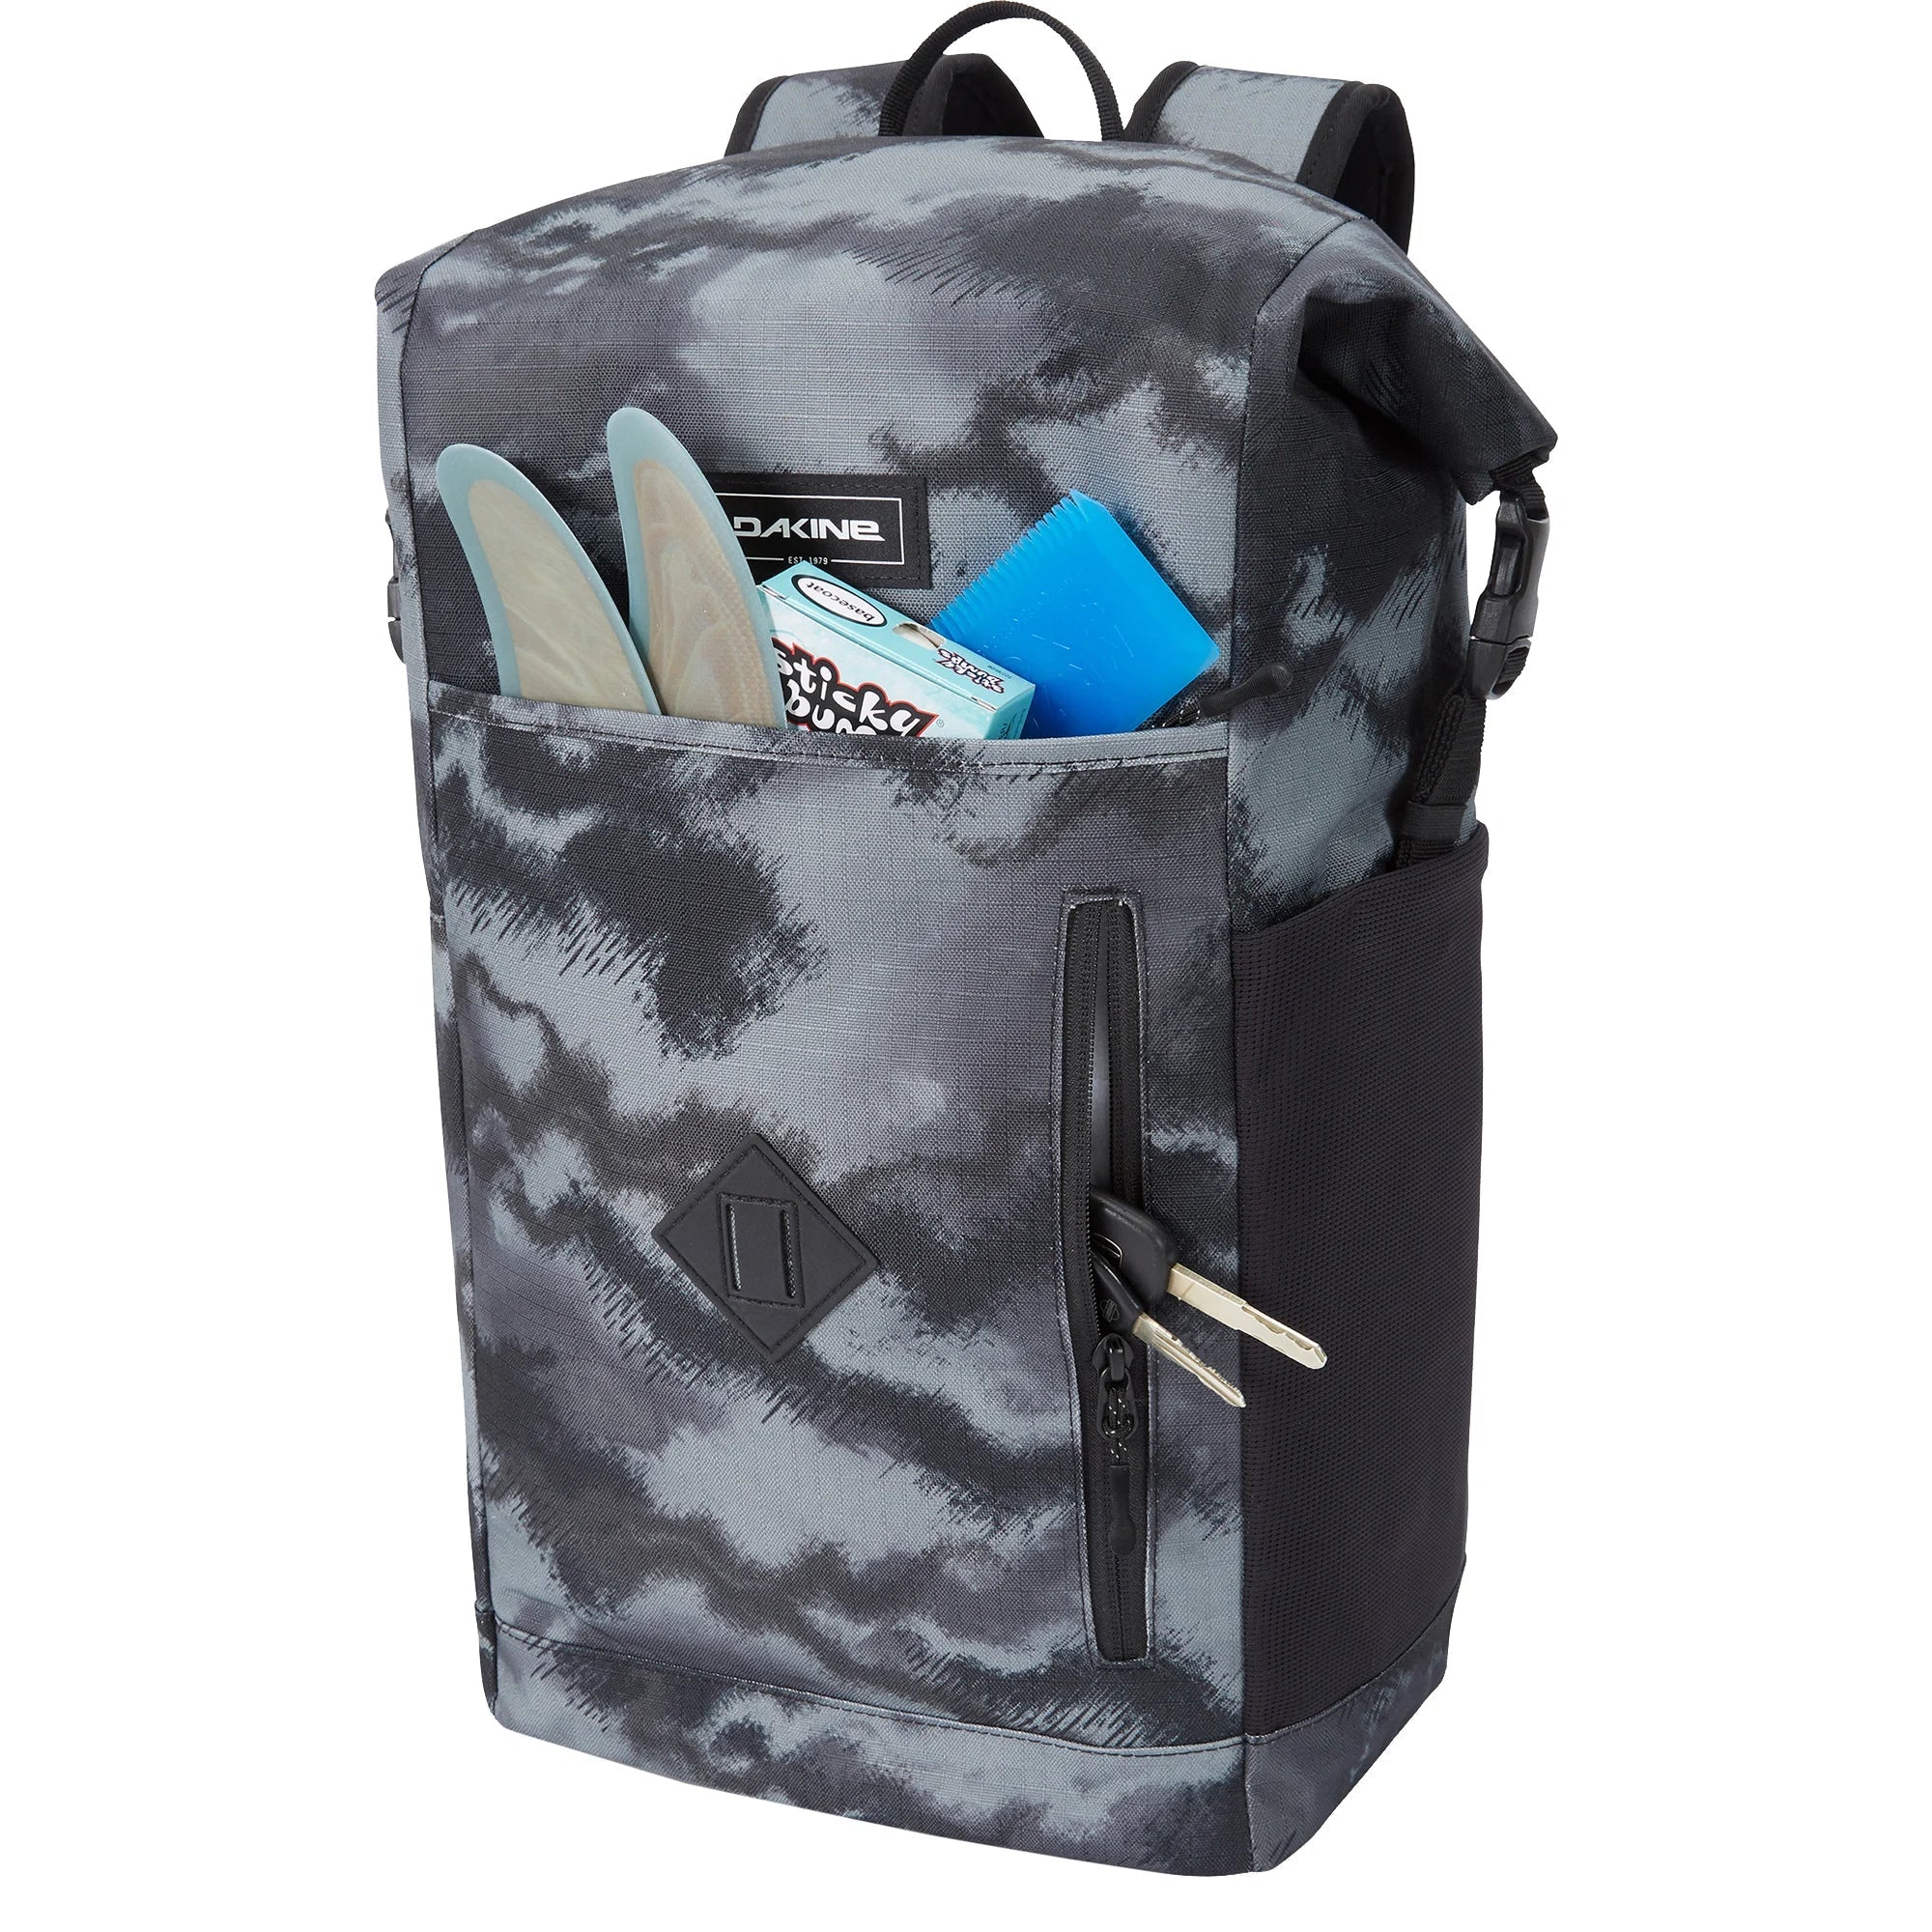 Dakine Packs & Bags Mission Surf Roll Top Pack 28L Rucksack 50 cm - Flash Reflective